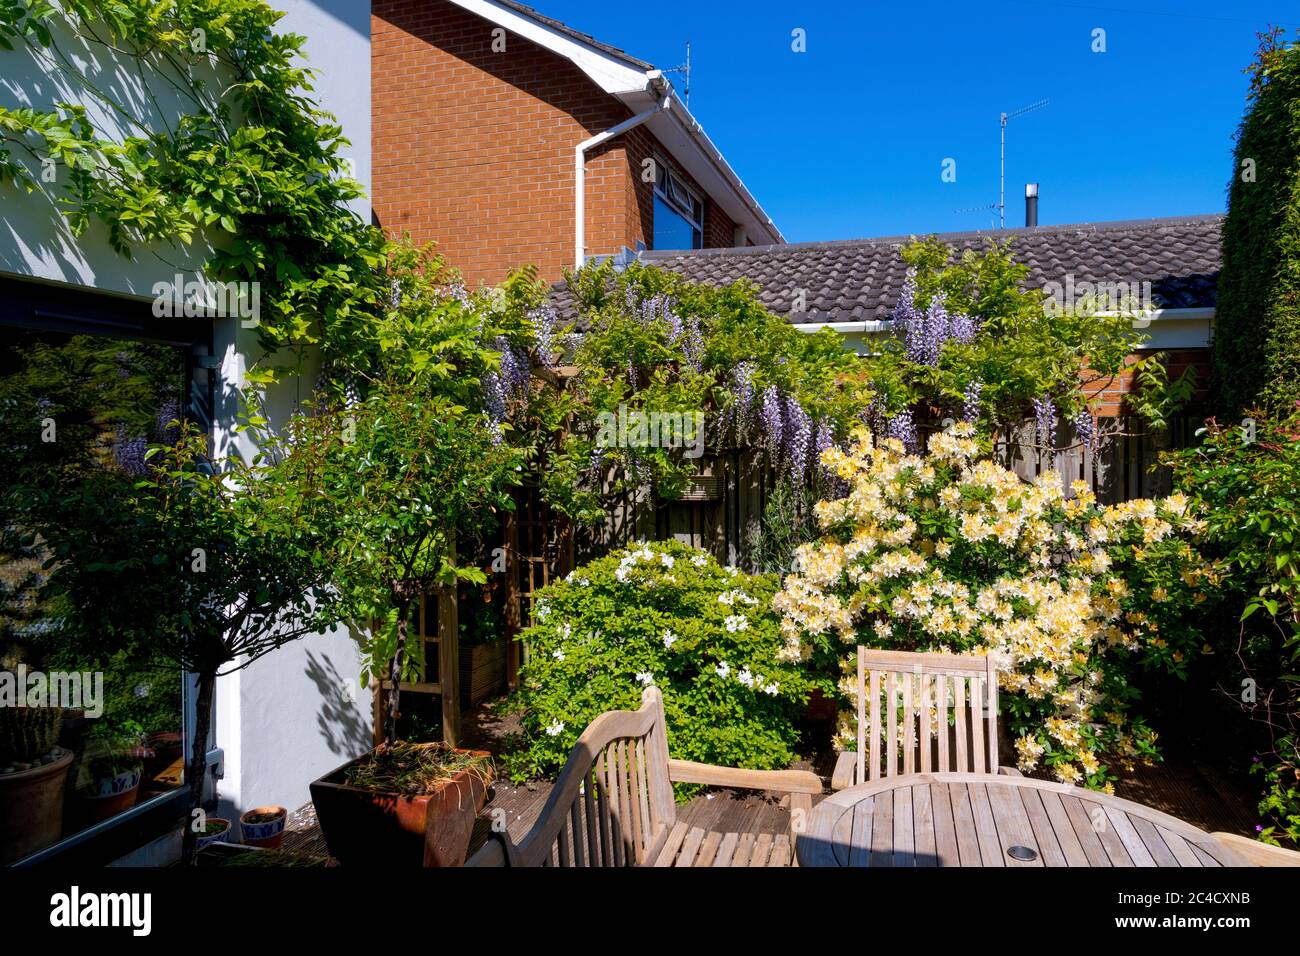 Wisteria and Azalea plants in garden setting Stock Photo